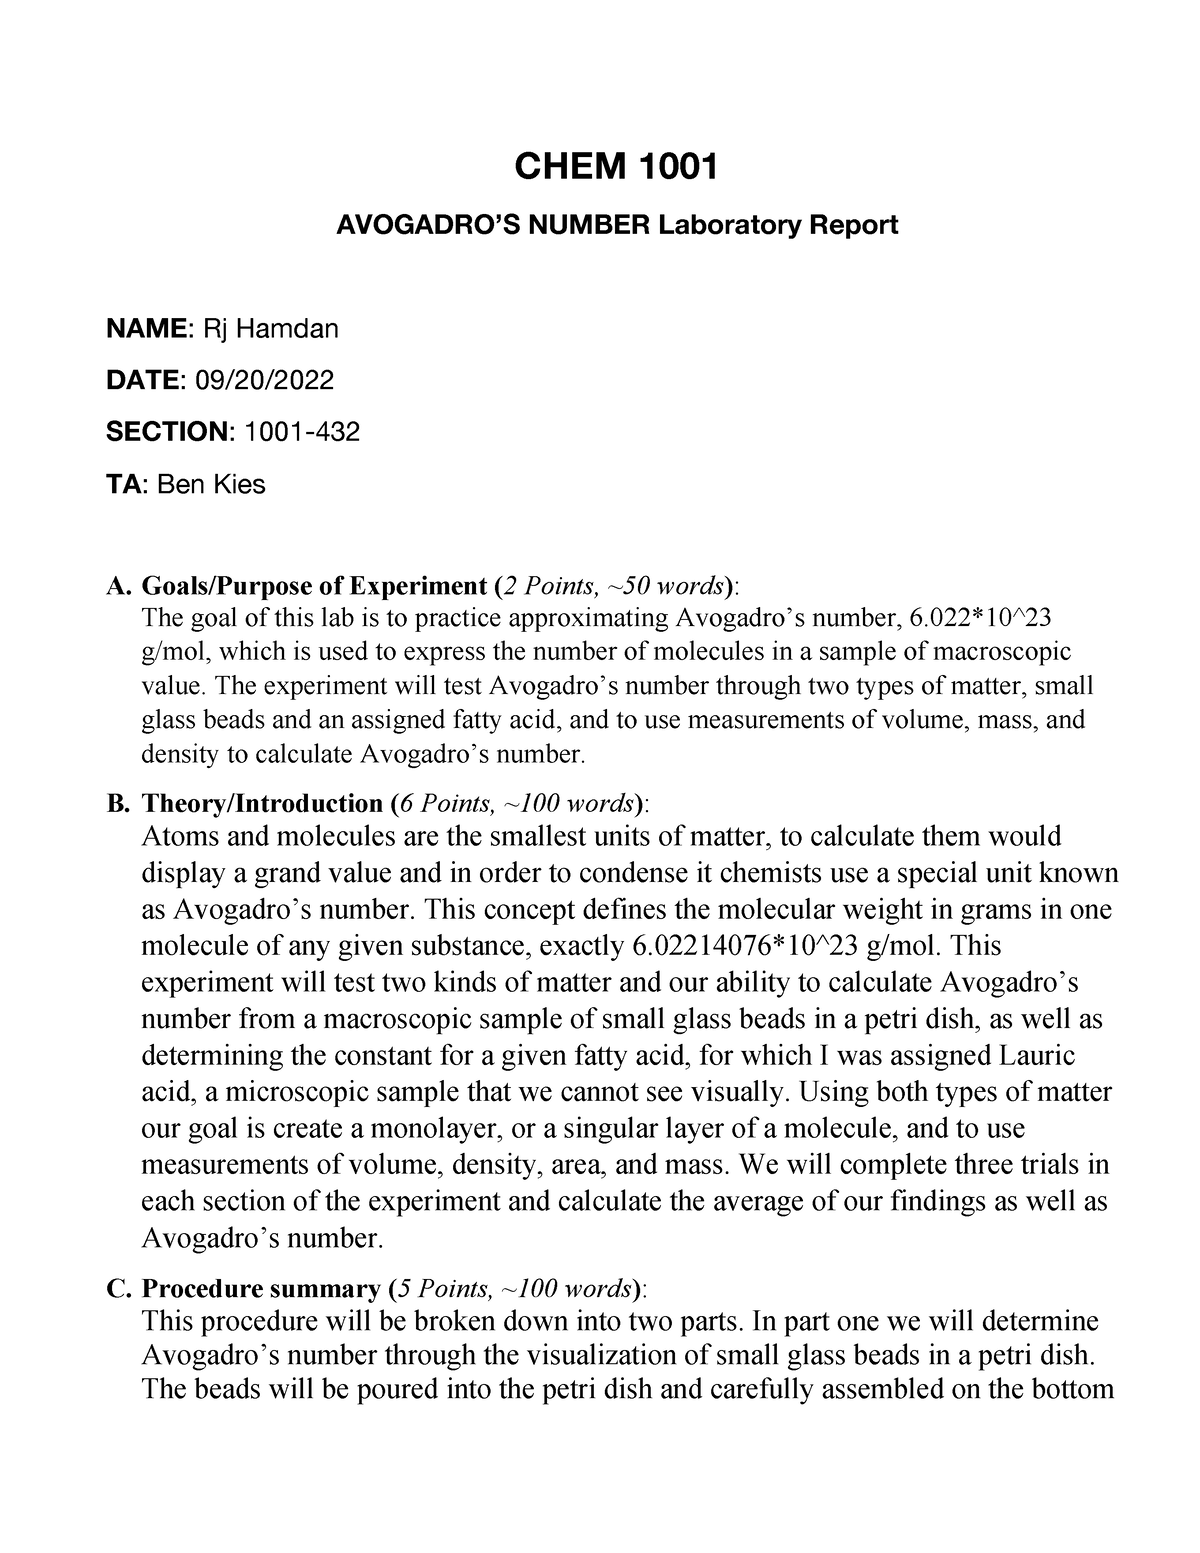 avogadro-s-number-lab-report-chem-1001-avogadro-s-number-laboratory-report-name-rj-hamdan